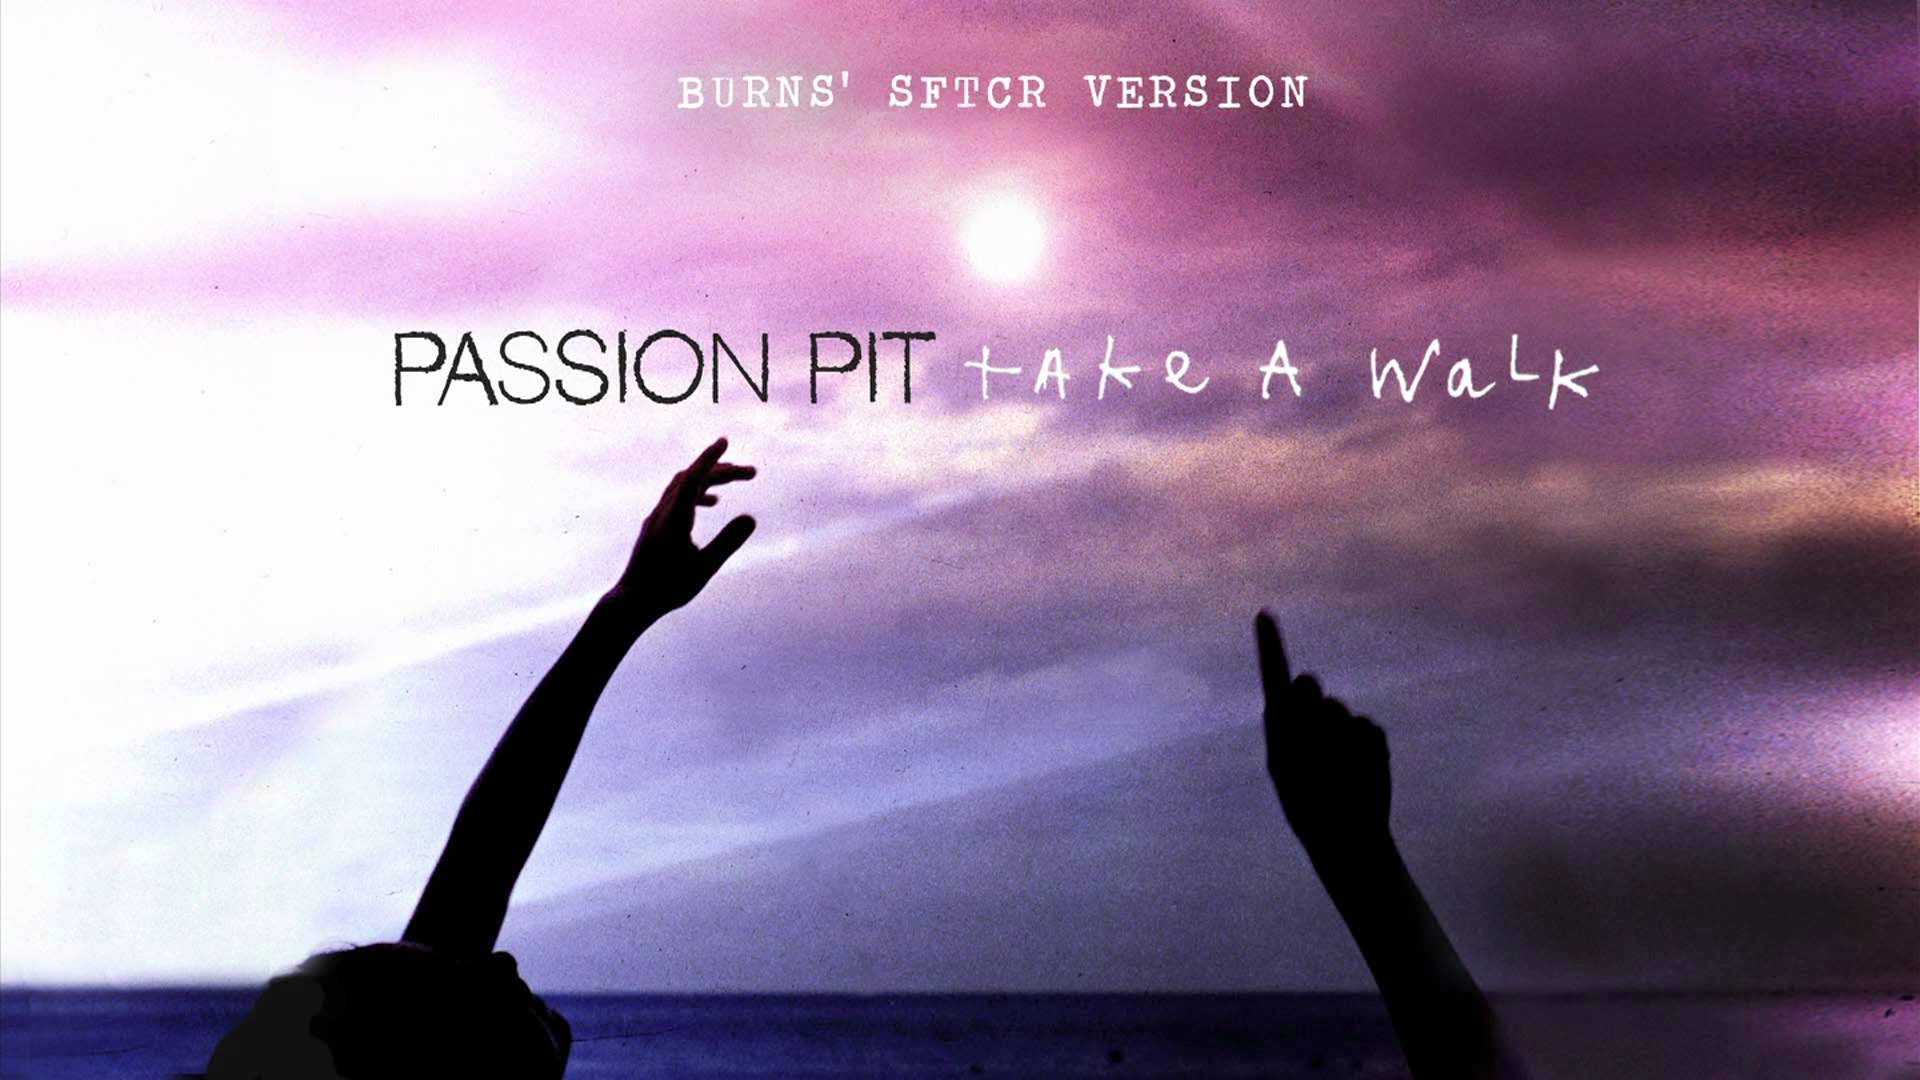 Passion Pit - Take A Walk Burns SFTCR Remix - YouTube